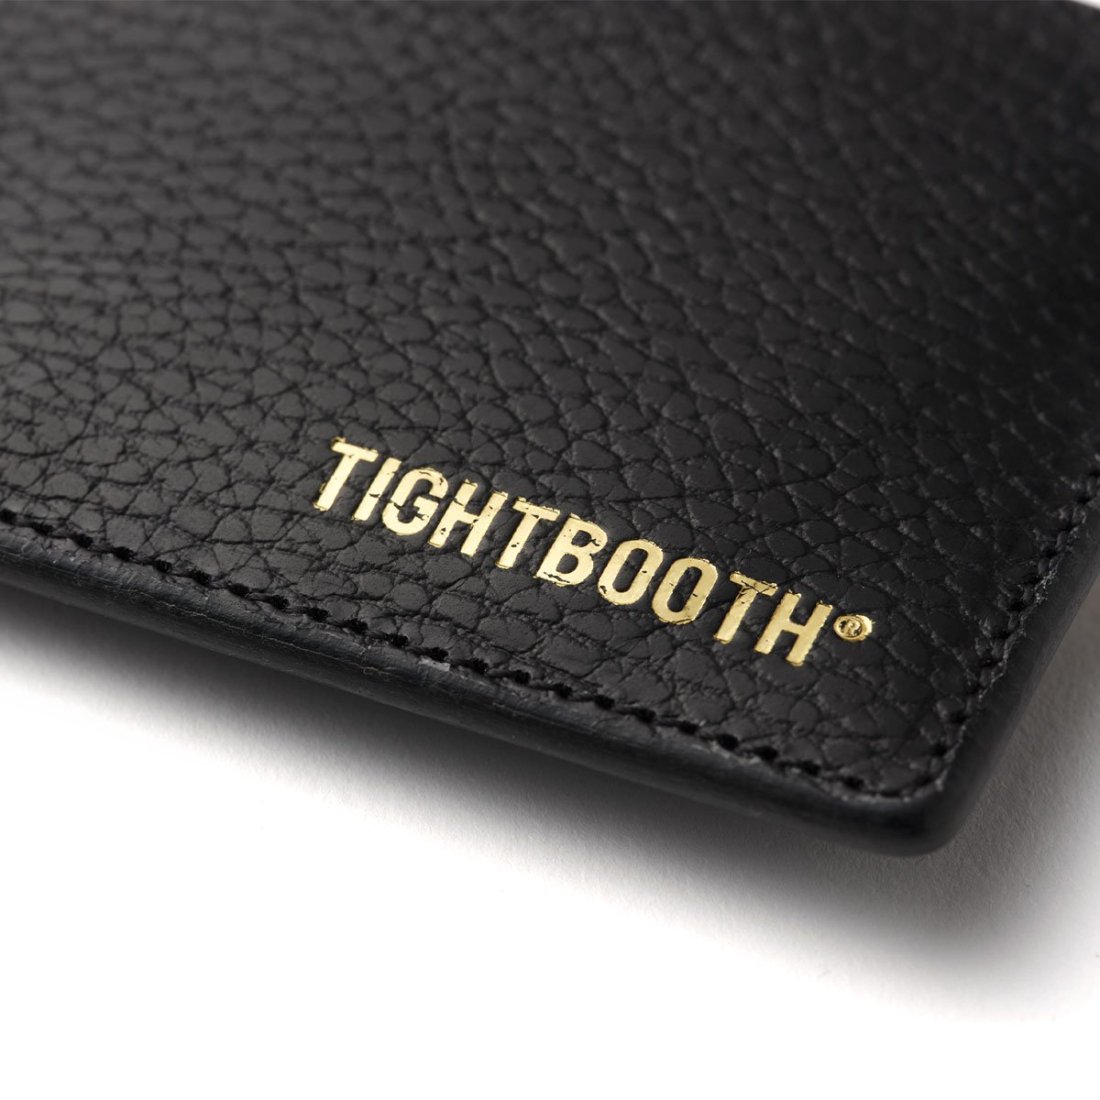 TIGHTBOOTH / CLIP CARD CASE